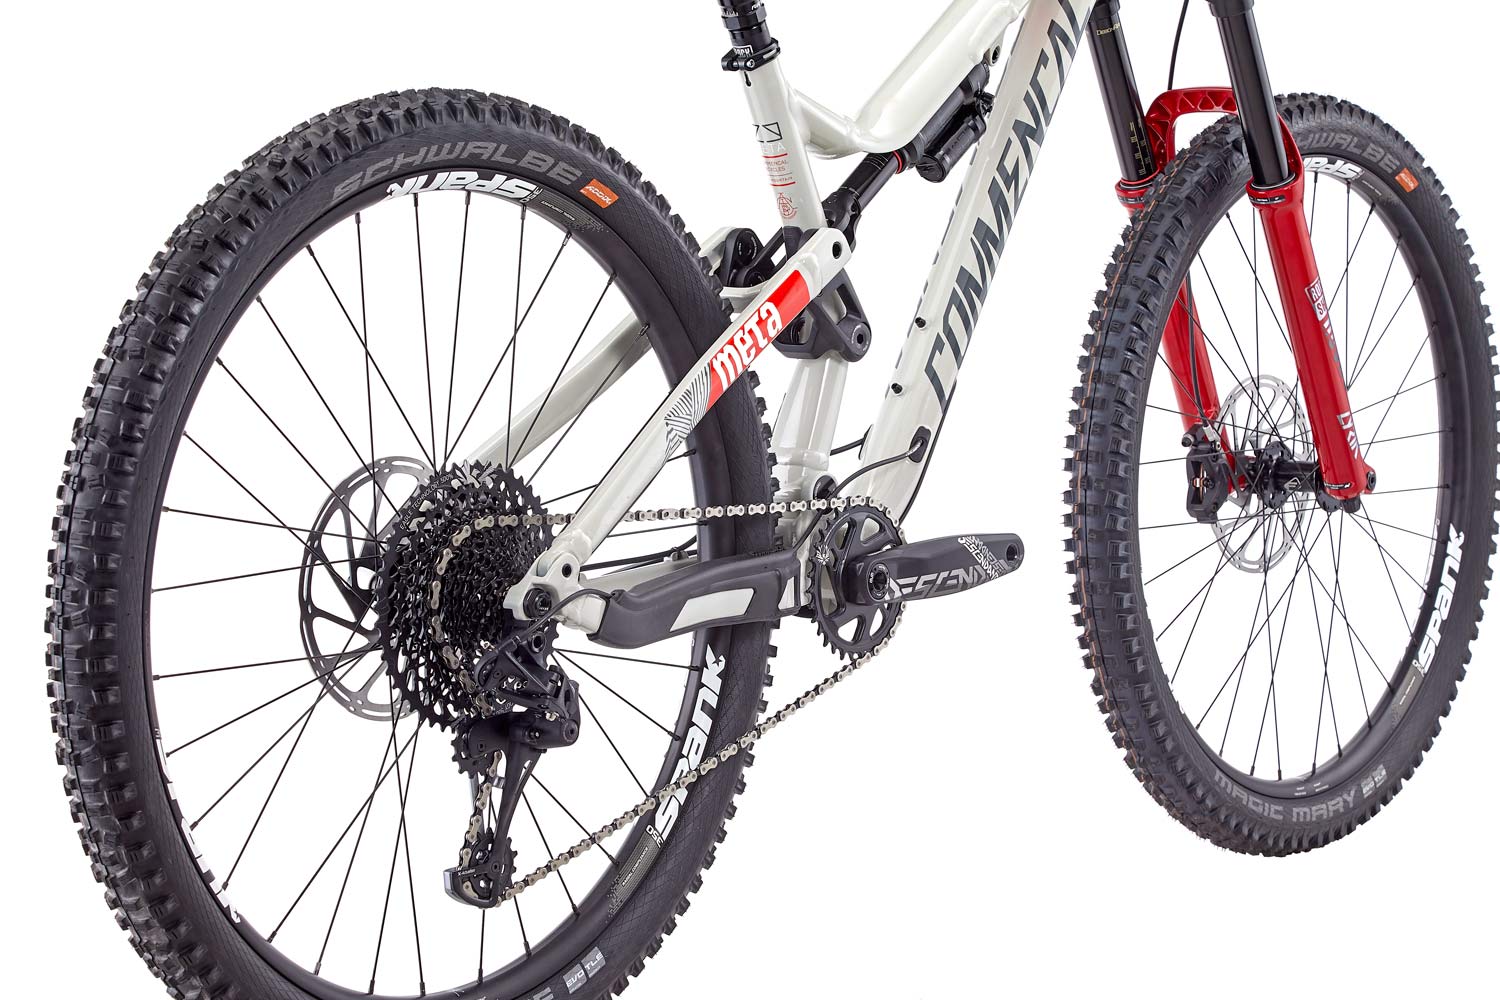 2019 Commencal Meta AM 29 Race SRAM Edition sponsor correct special edition aluminum alloy enduro mountain bike